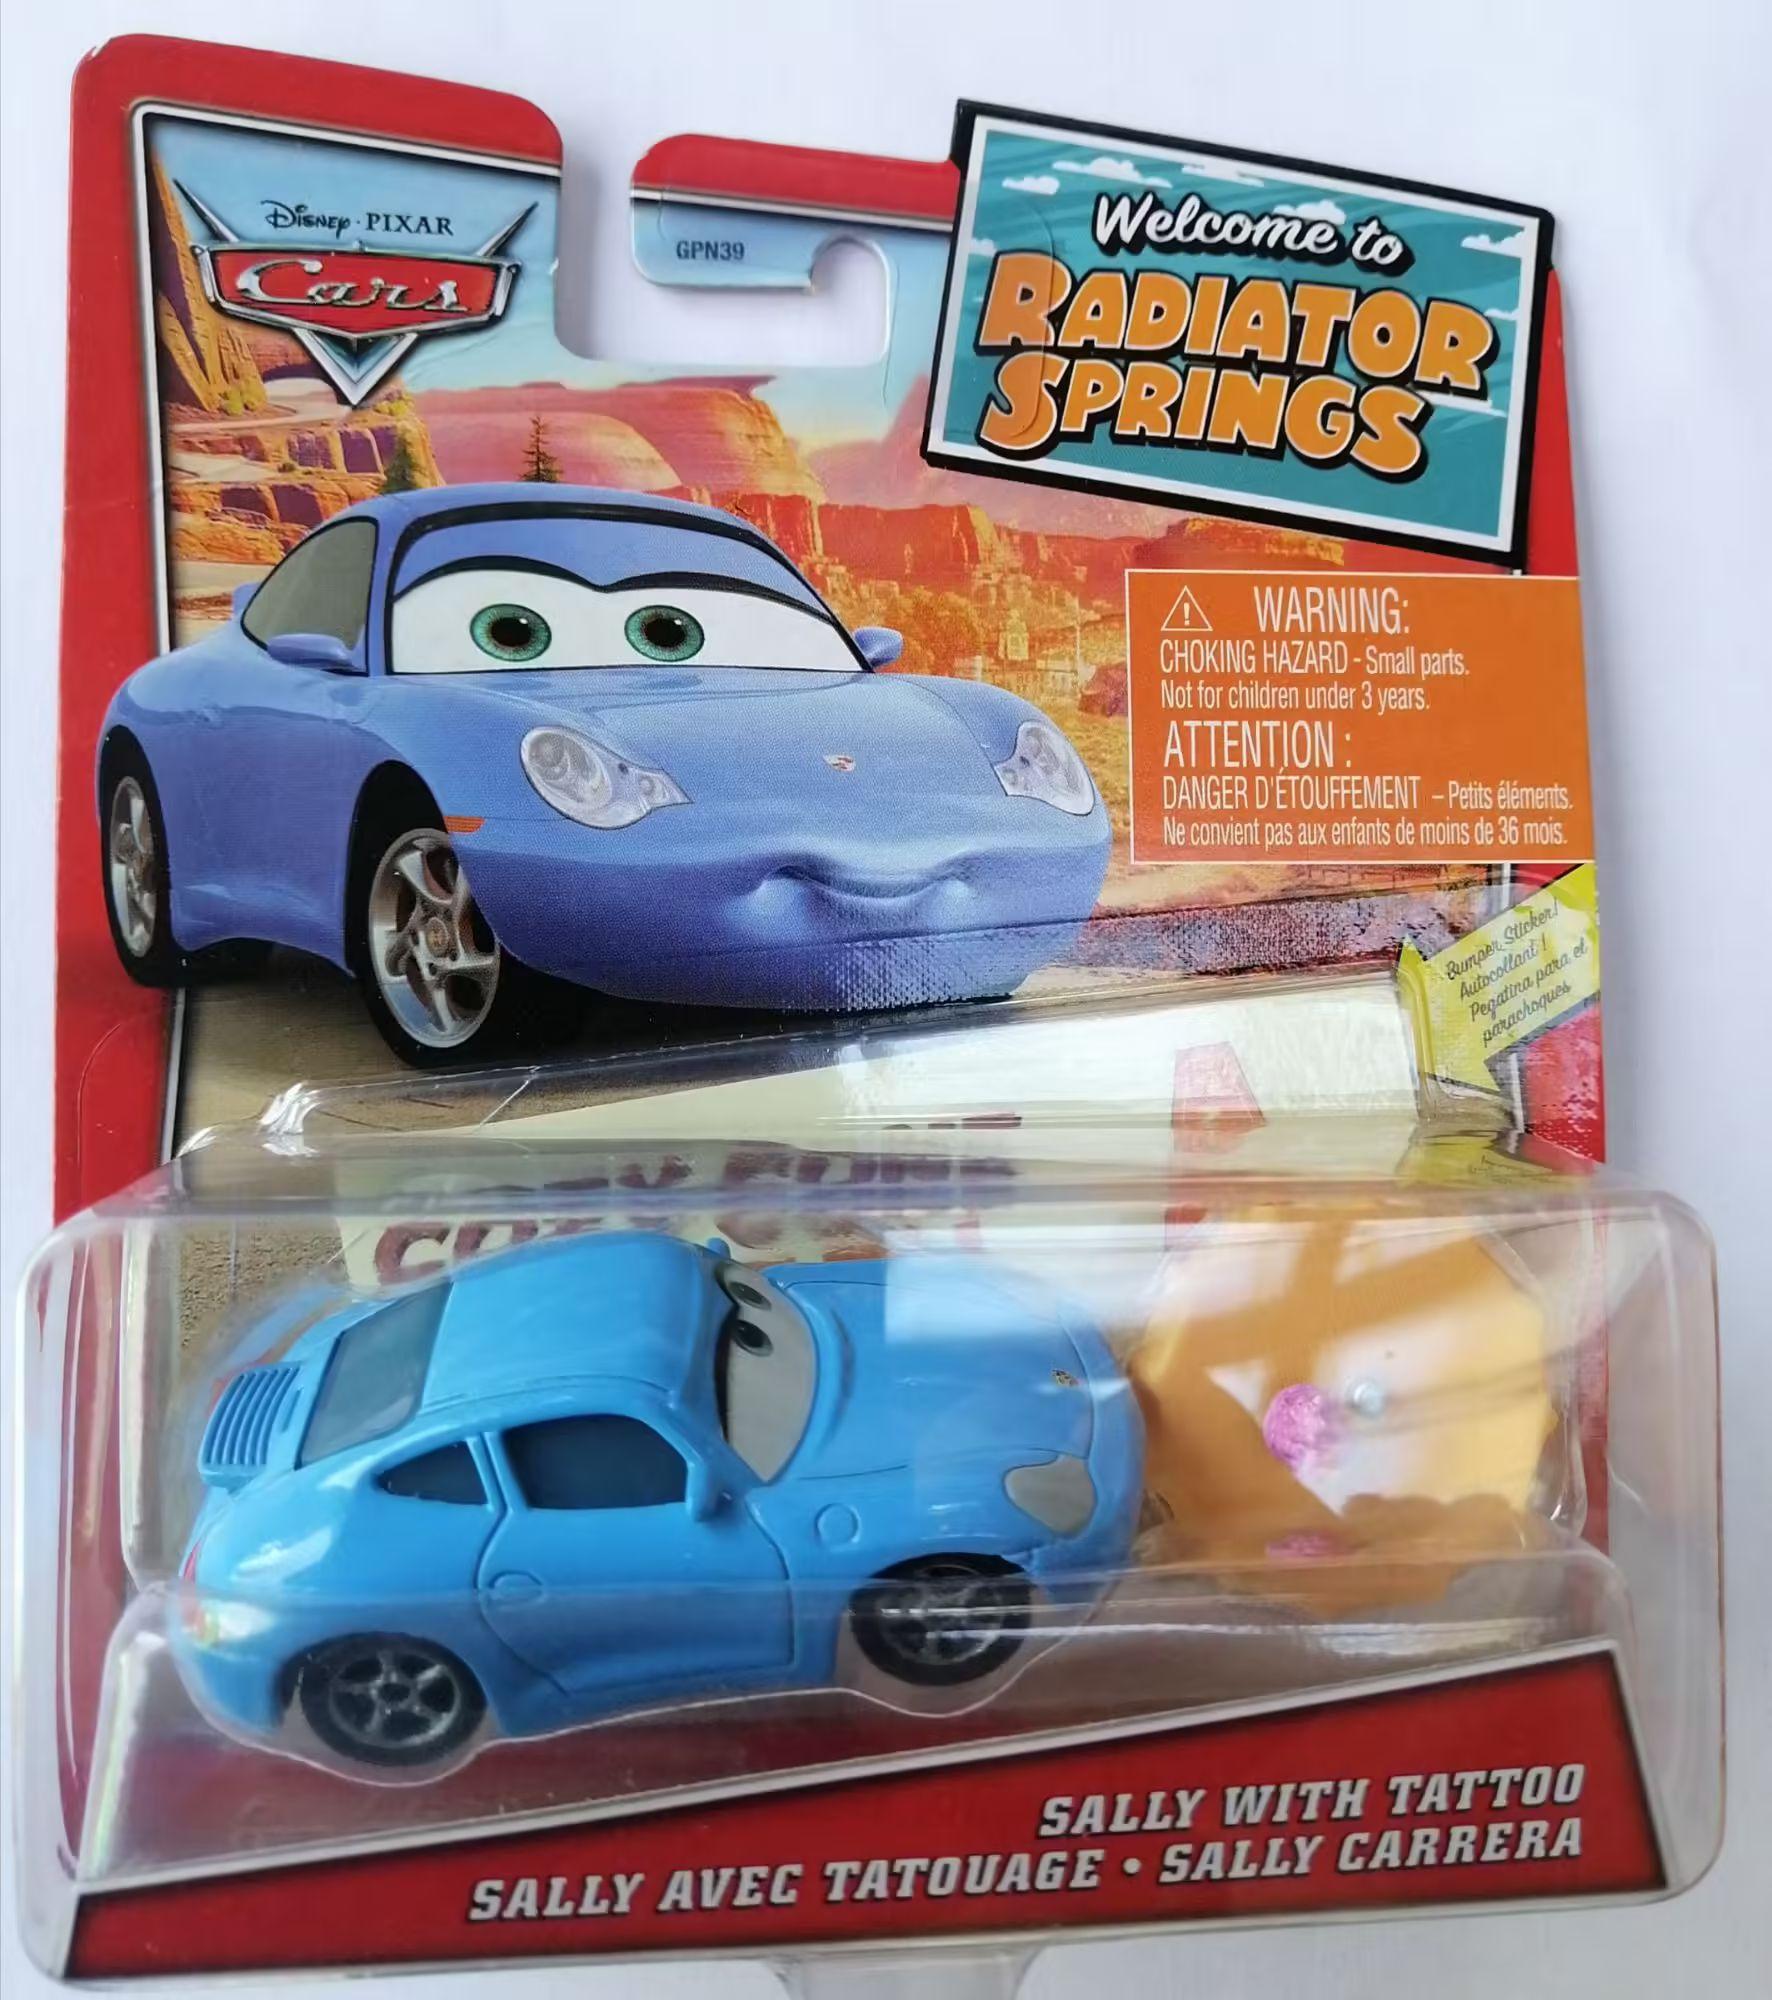 Disney Pixar Cars Coffret 3 Vehicules Radiator Springs à lEchelle 1